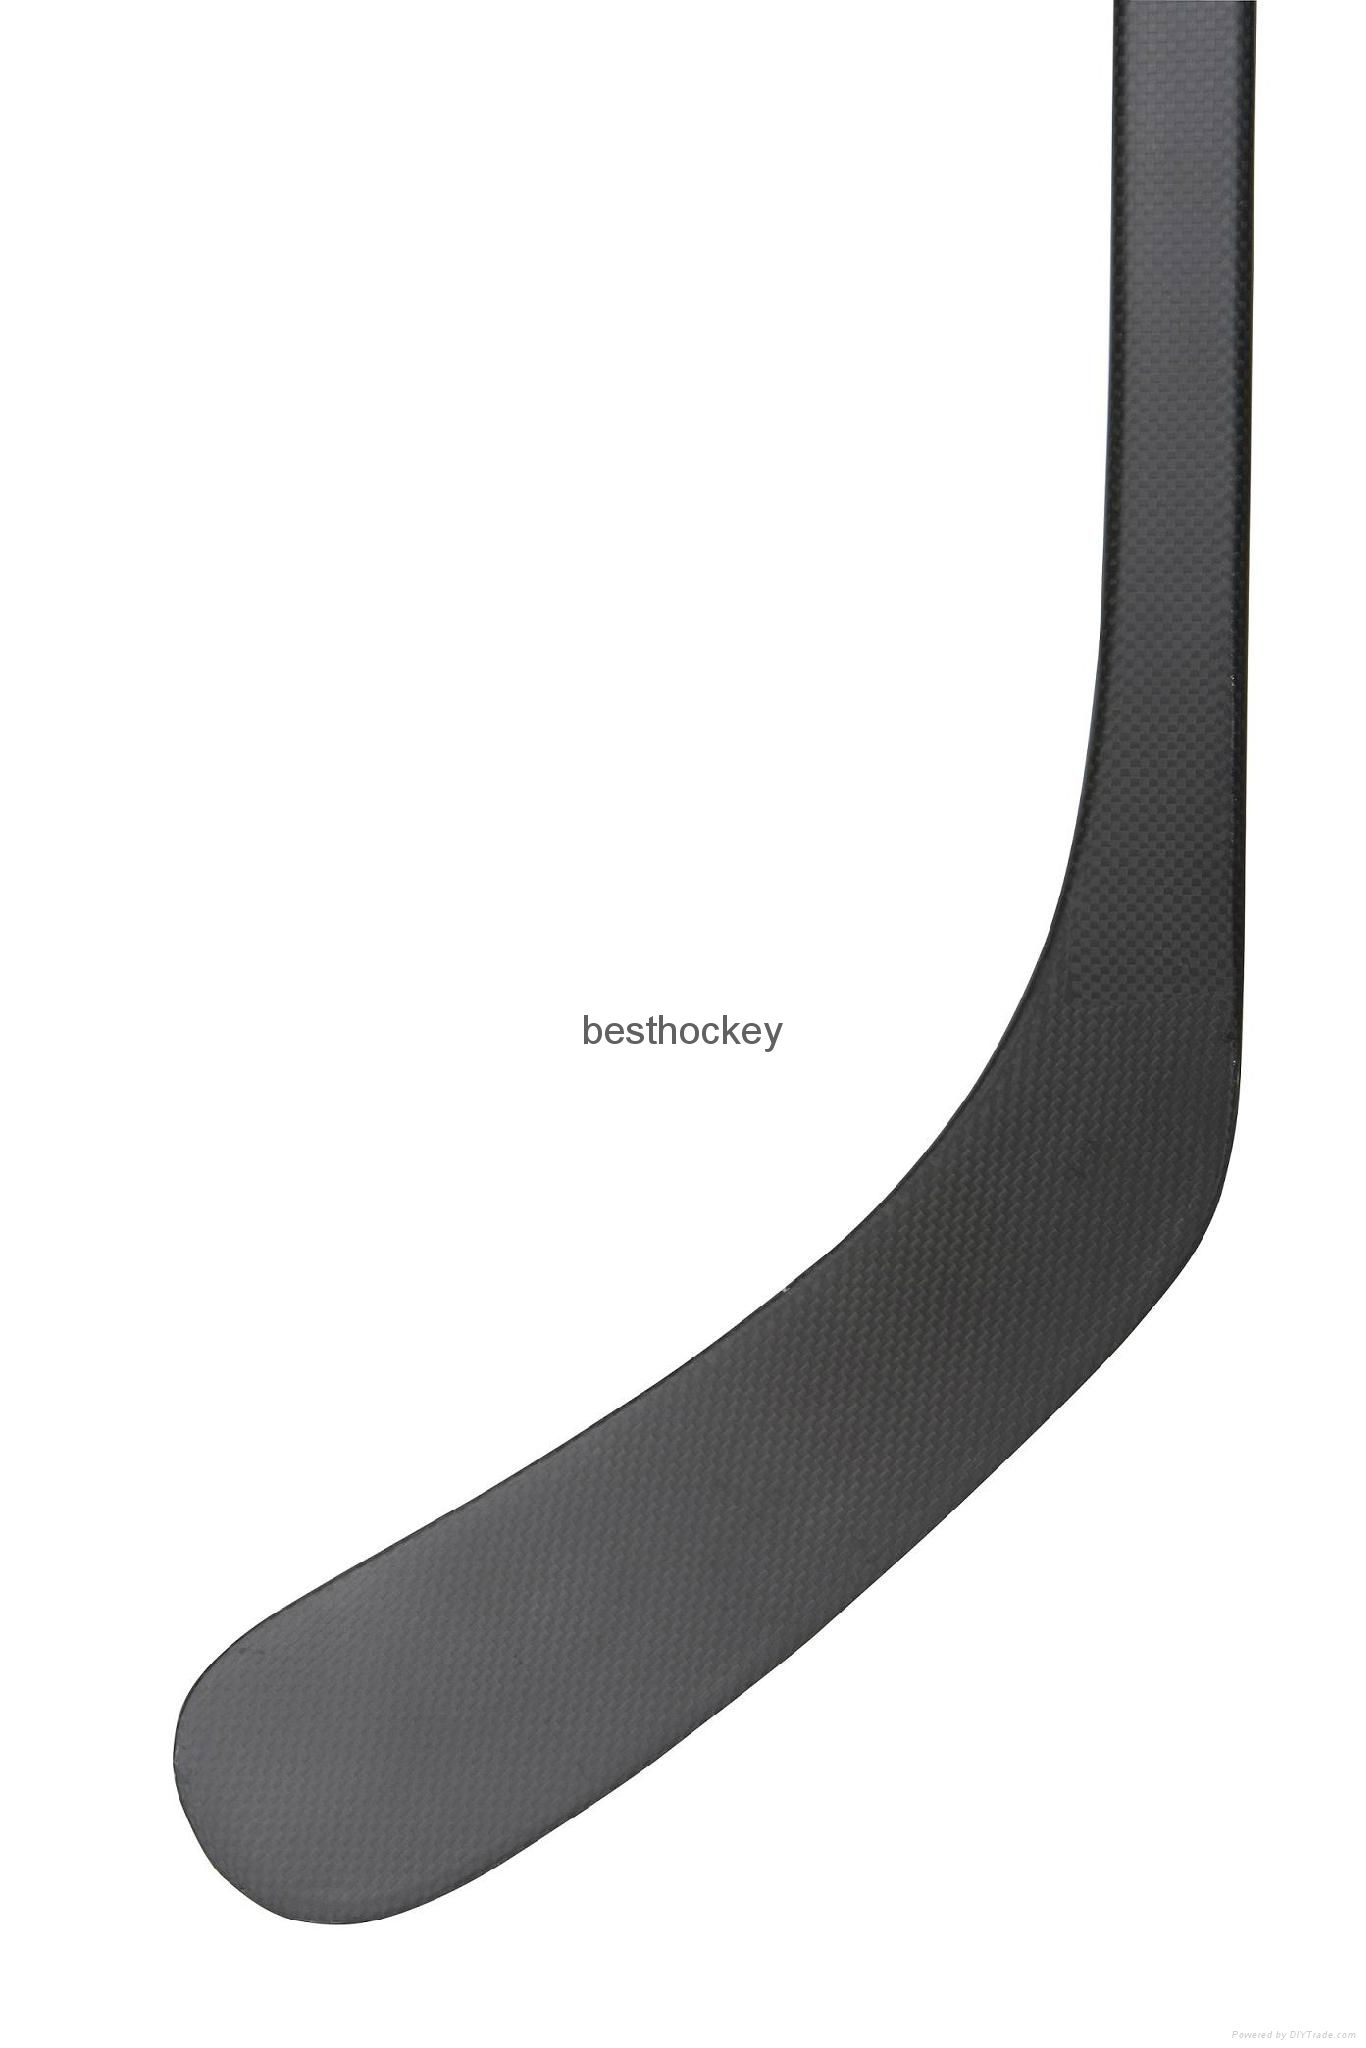 Custom High-Performance Carbon Fiber Elite Ice Hockey Stick 4